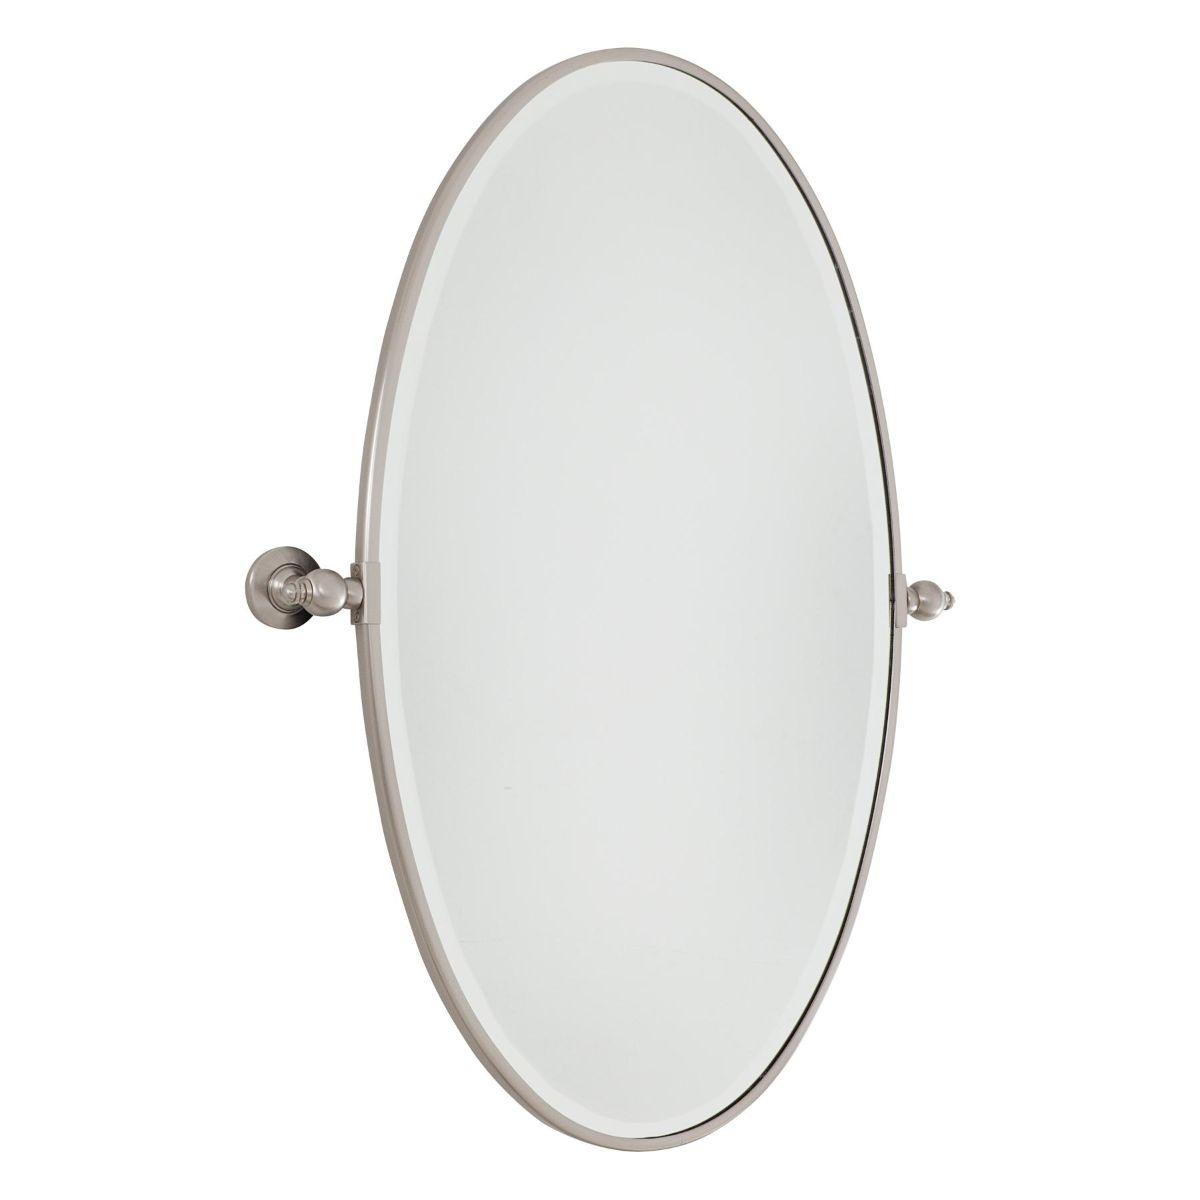 Pivoting Mirrors 27 In. X 33.75 In. Bathroom & Vanity Mirror